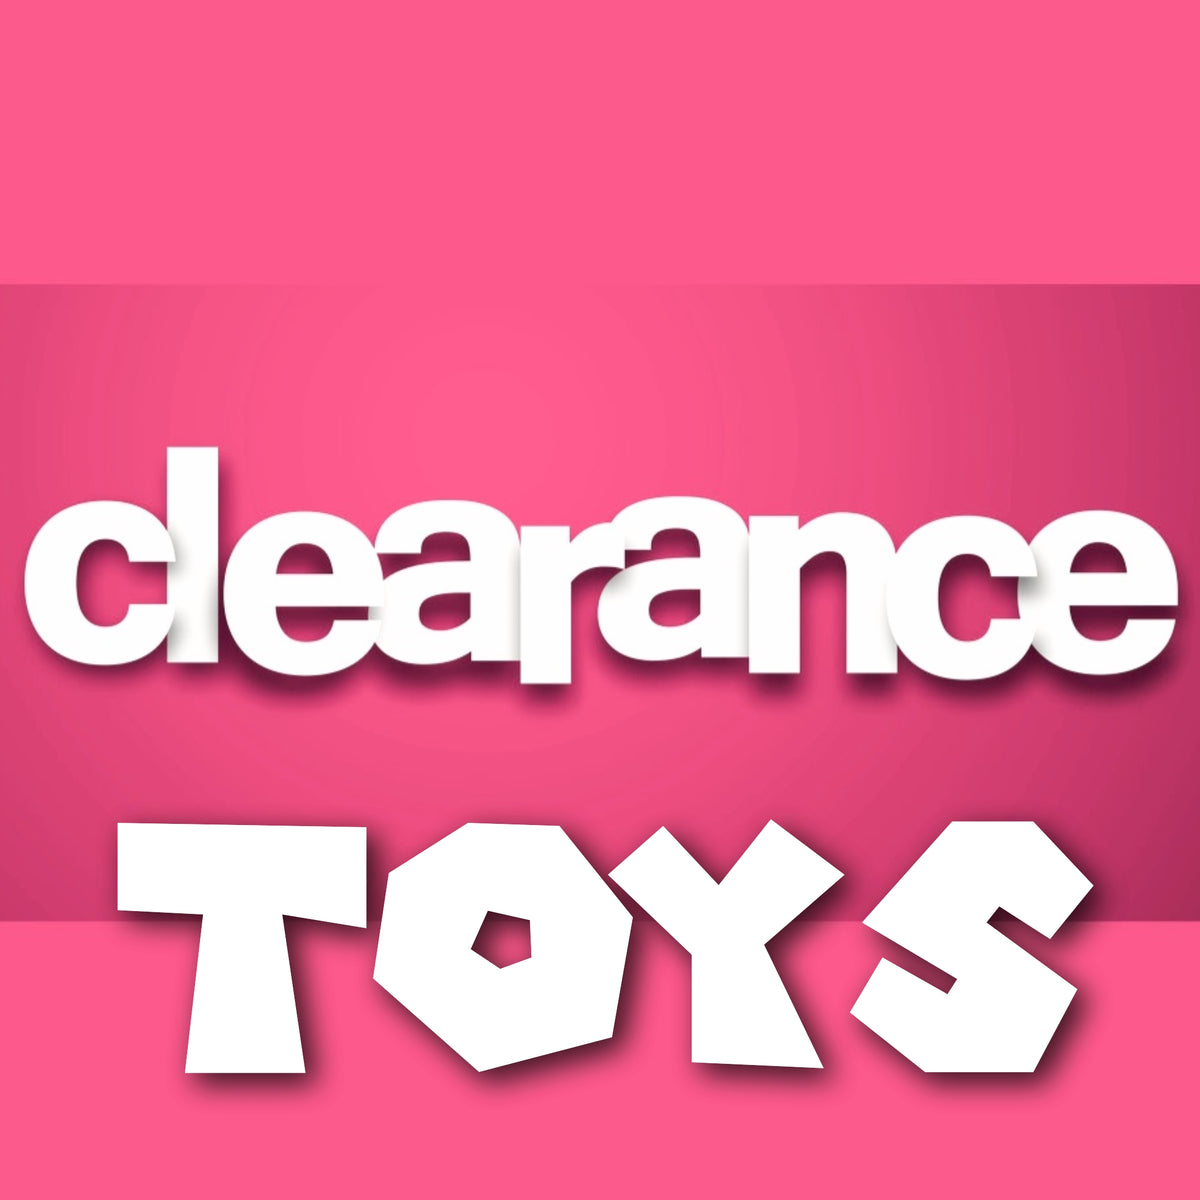 CLEARANCE TOYS! – Colossal Toys Inc.